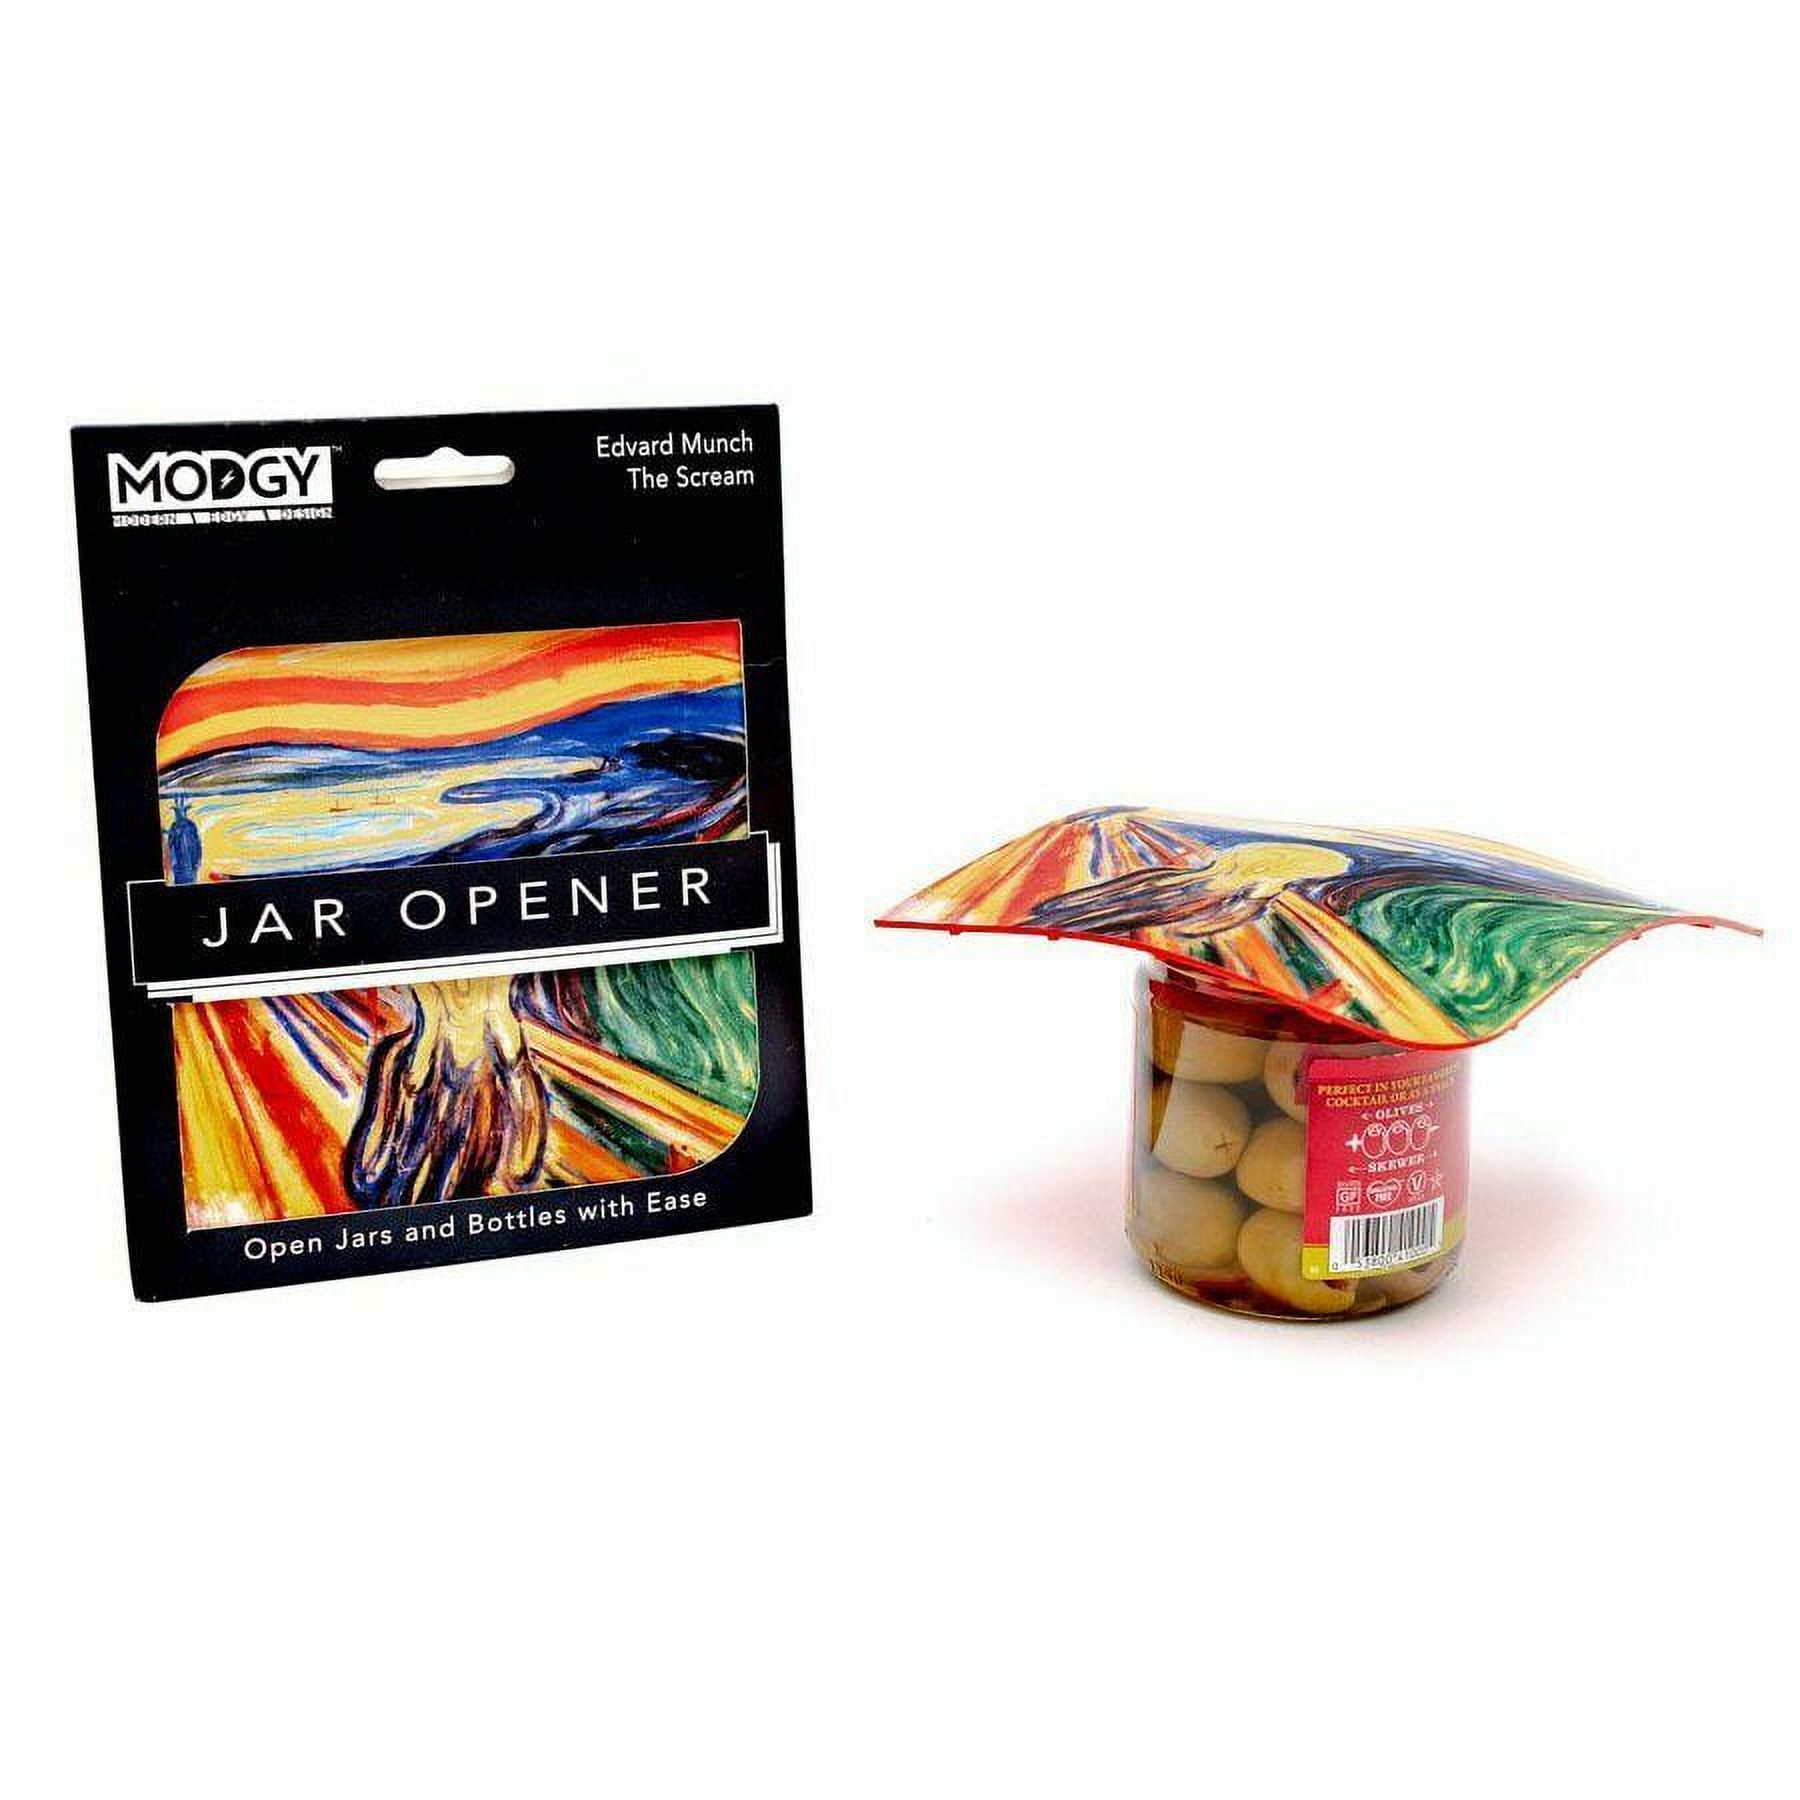 Modgy Silicone Jar Opener / Trivet - Edvard Munch The Scream - image 5 of 7